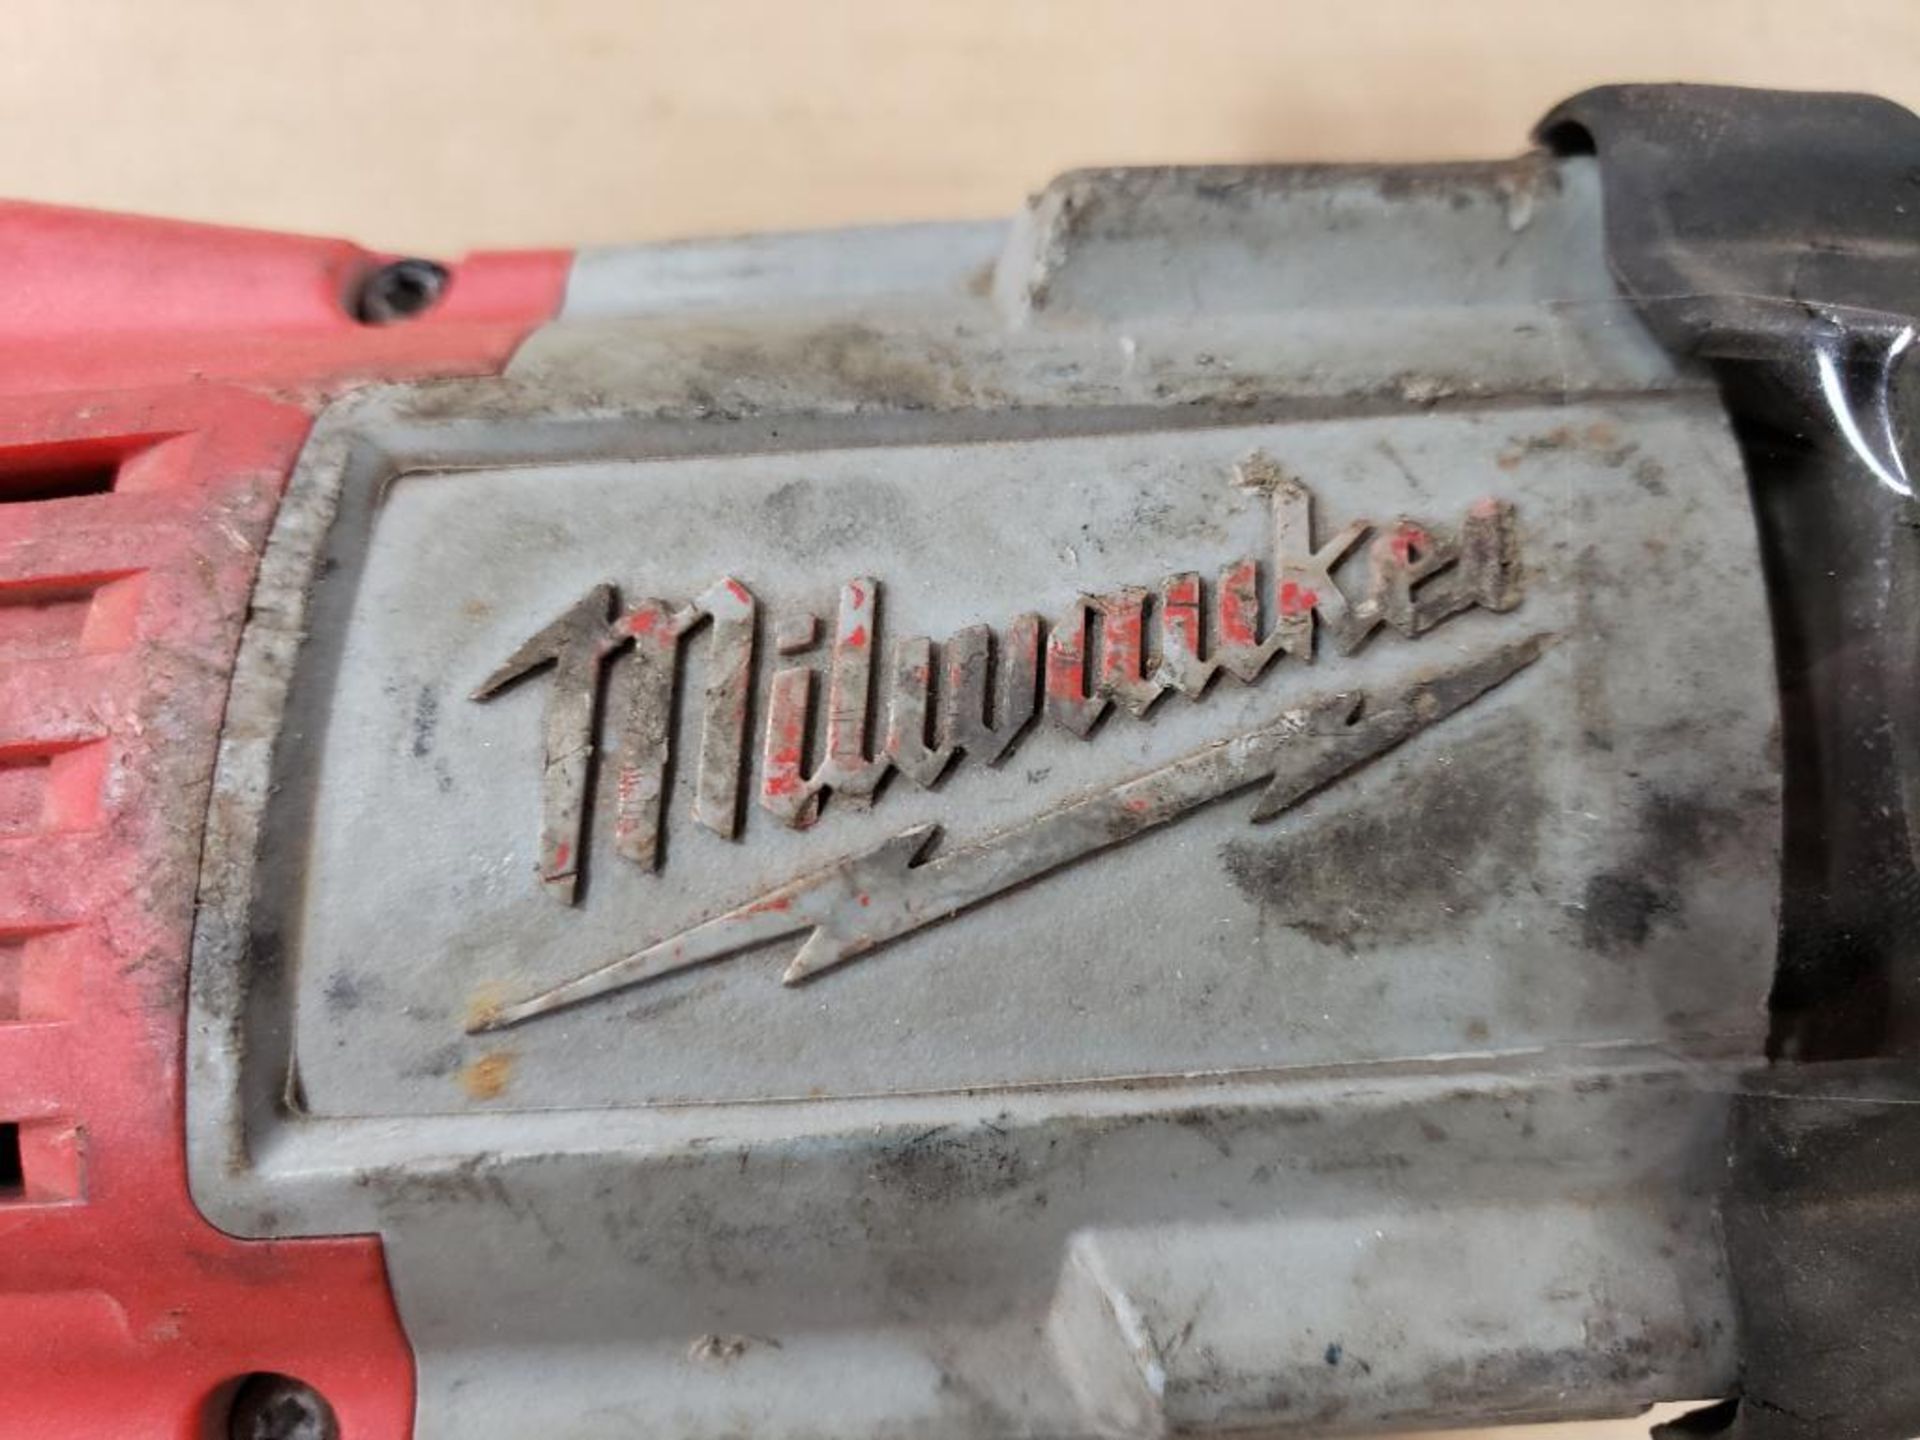 Milwaukee 6519-30 Sawzall reciprocating saw. - Image 2 of 4